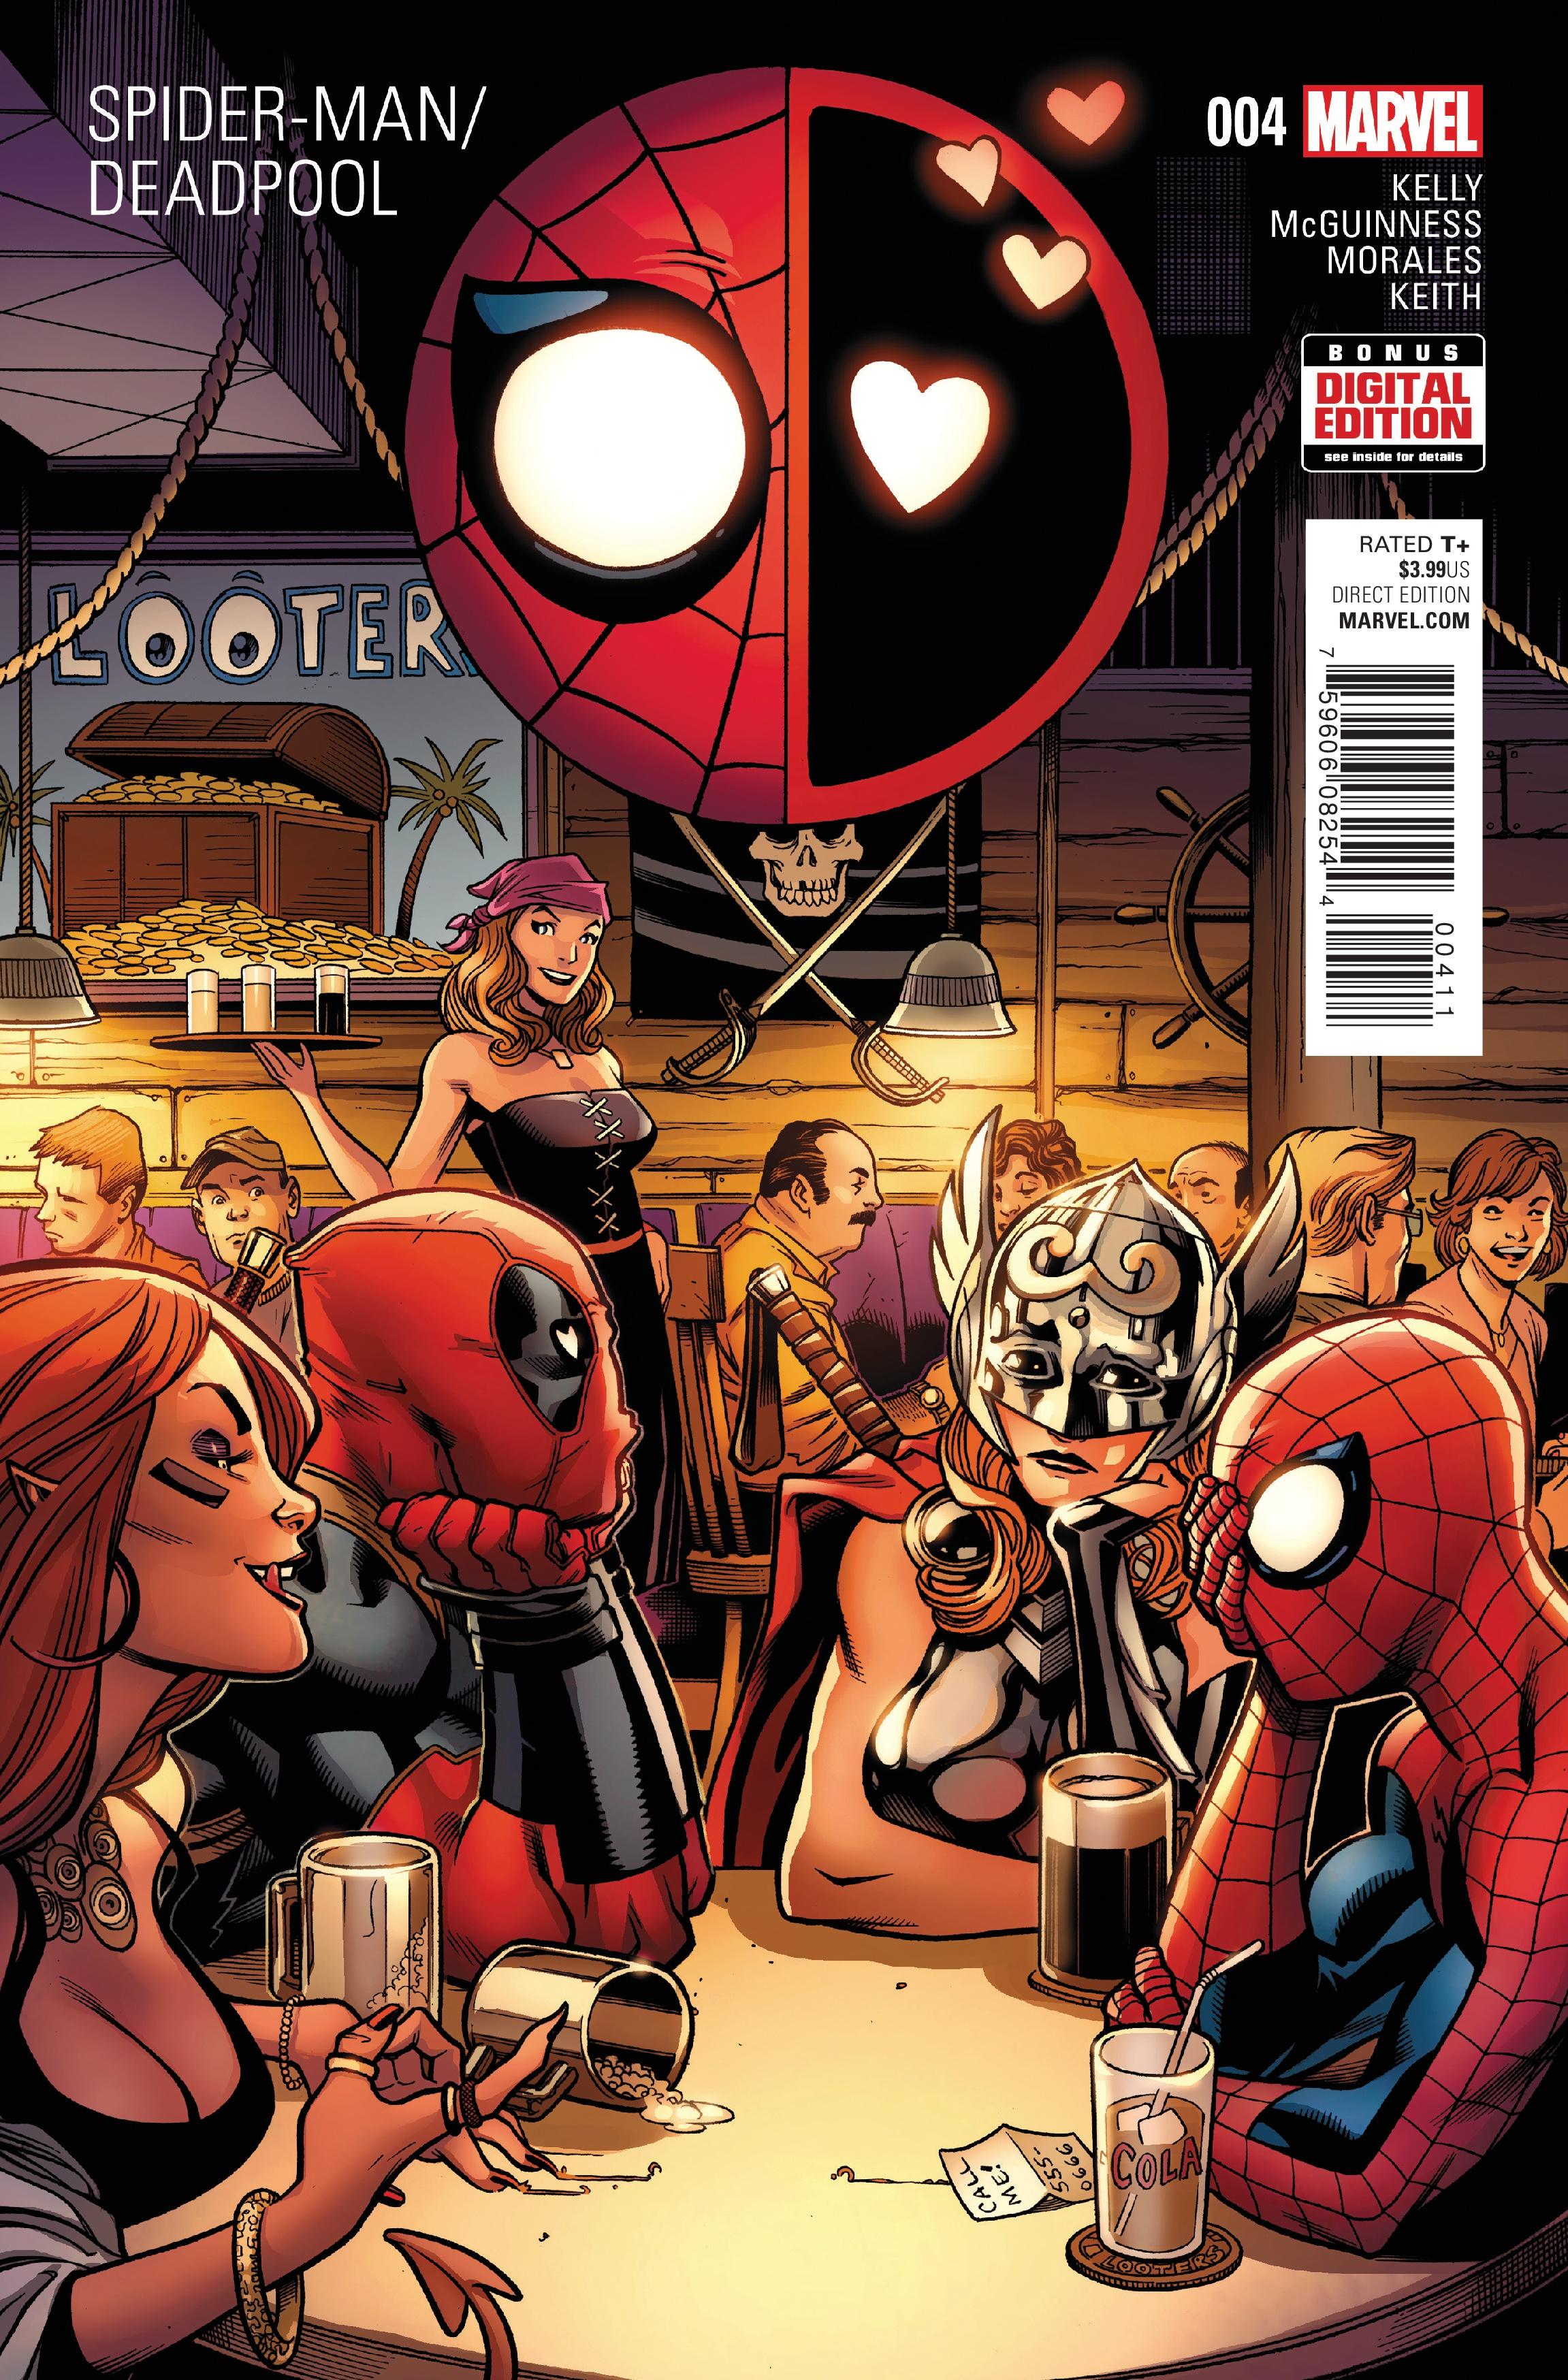 Spider-Man/Deadpool Vol. 1 #4